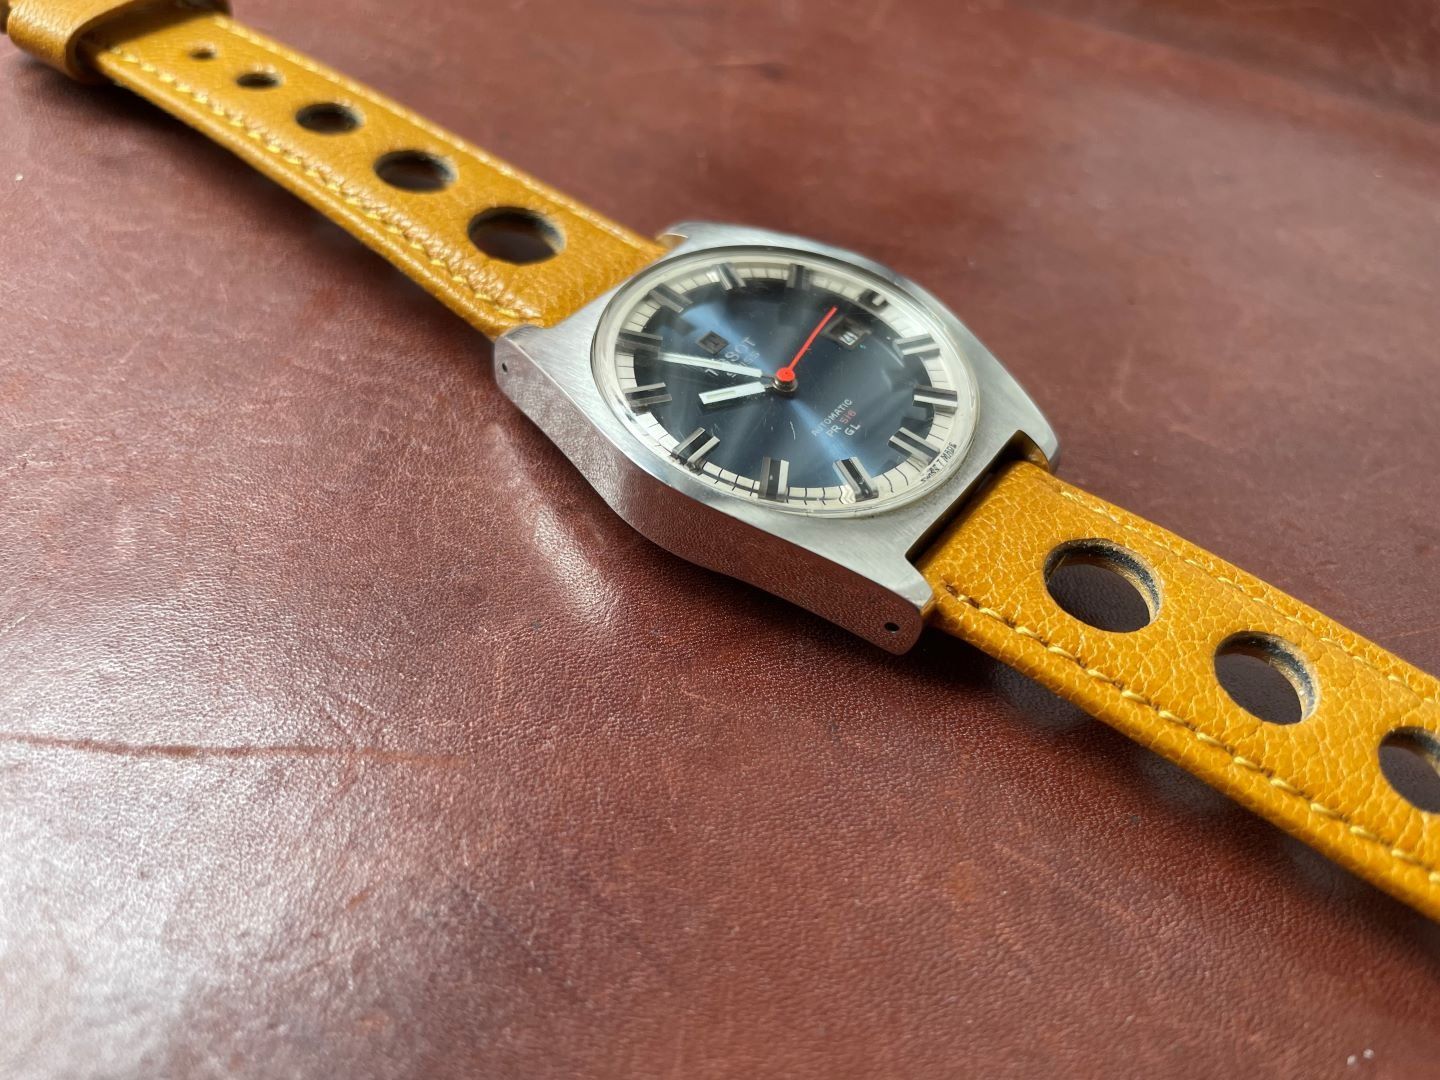 A vintage Tissot timepiece